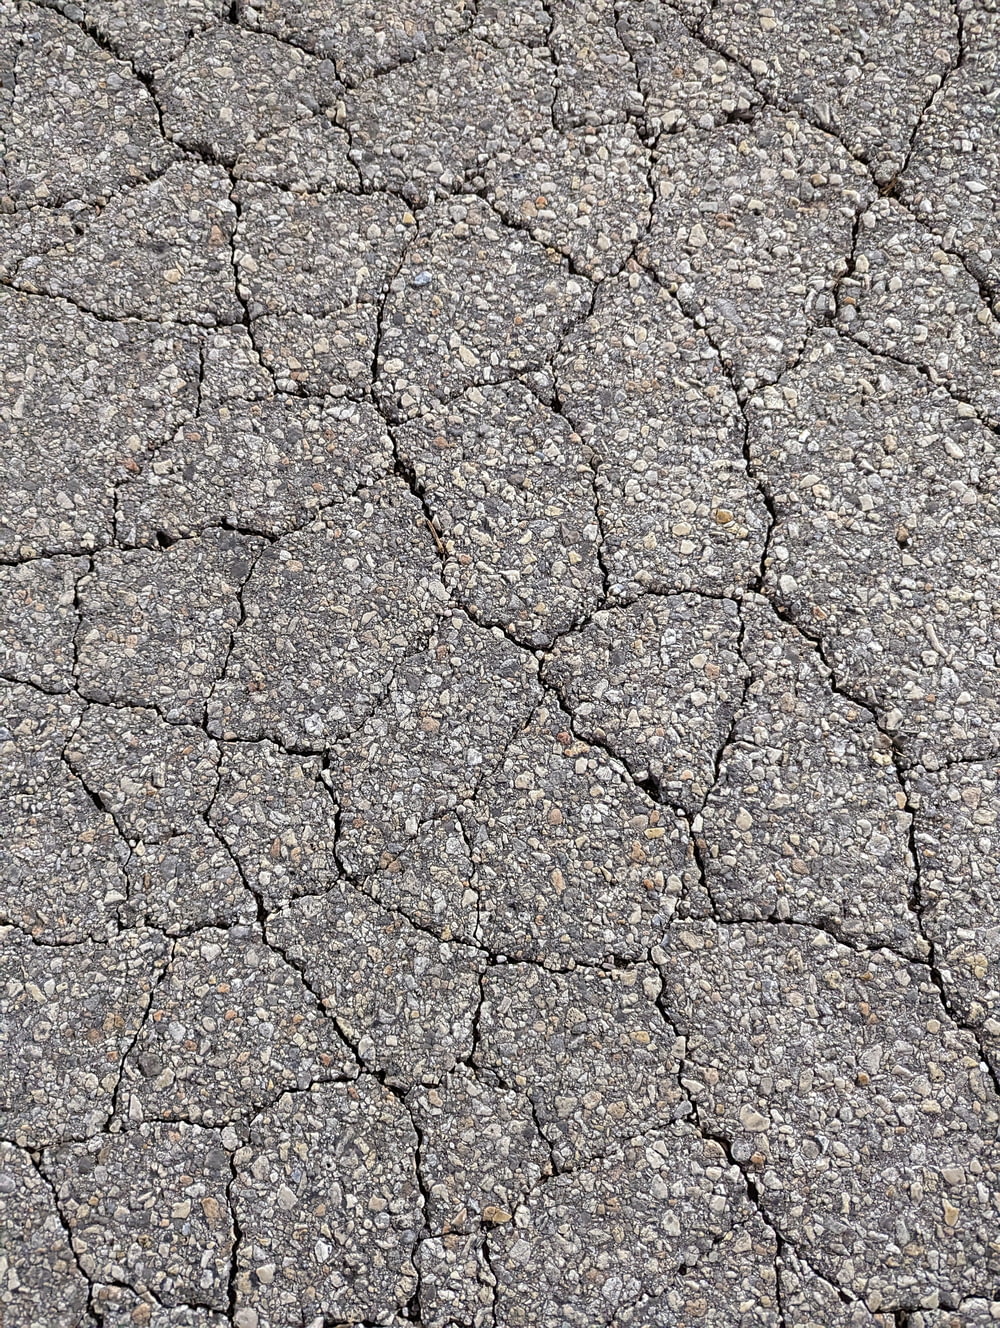 a close up of a cracked asphalt surface